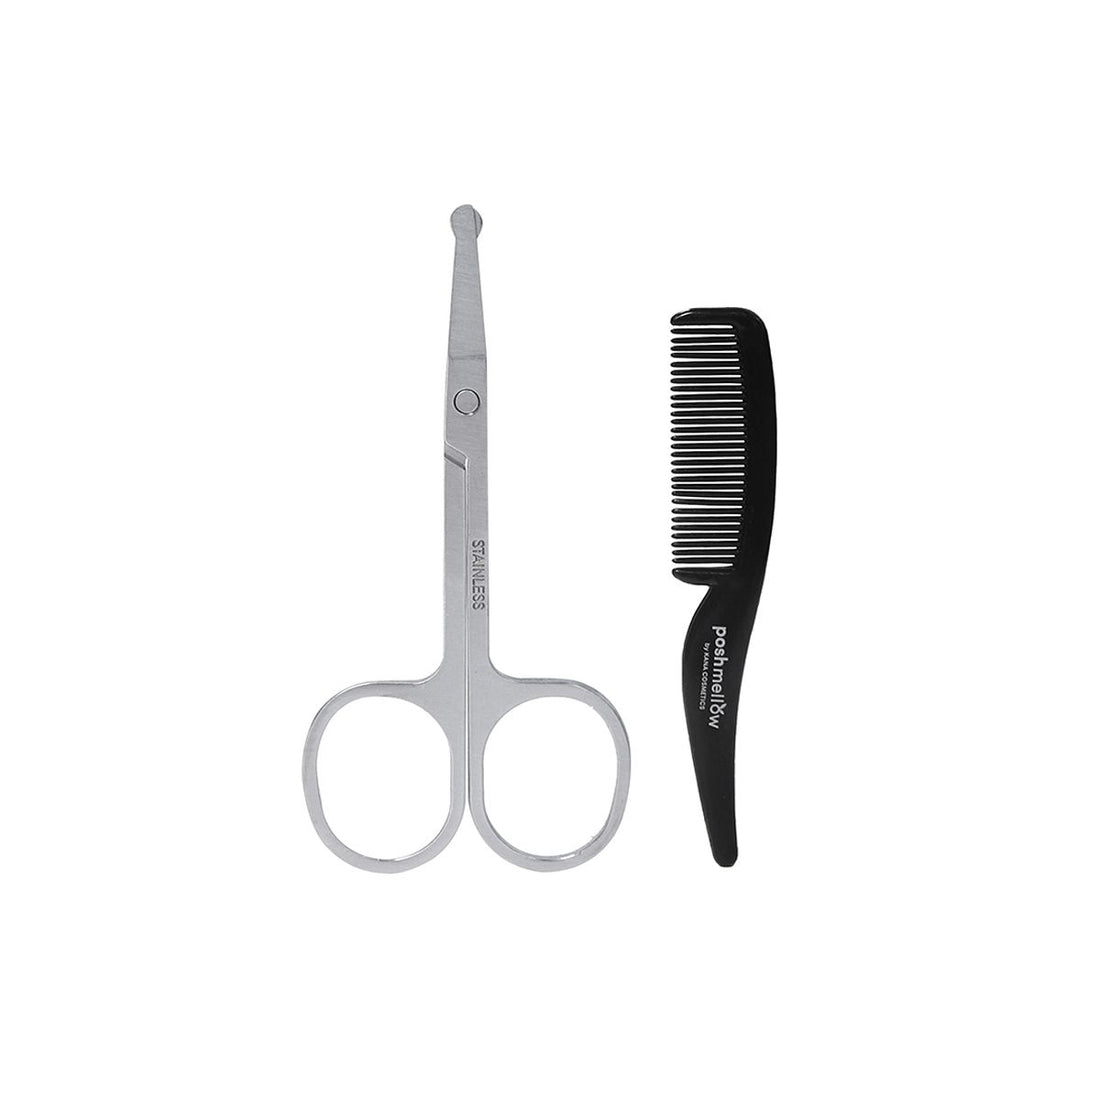 Mustache Trimmer - Mustache Comb Set by Poshmellow